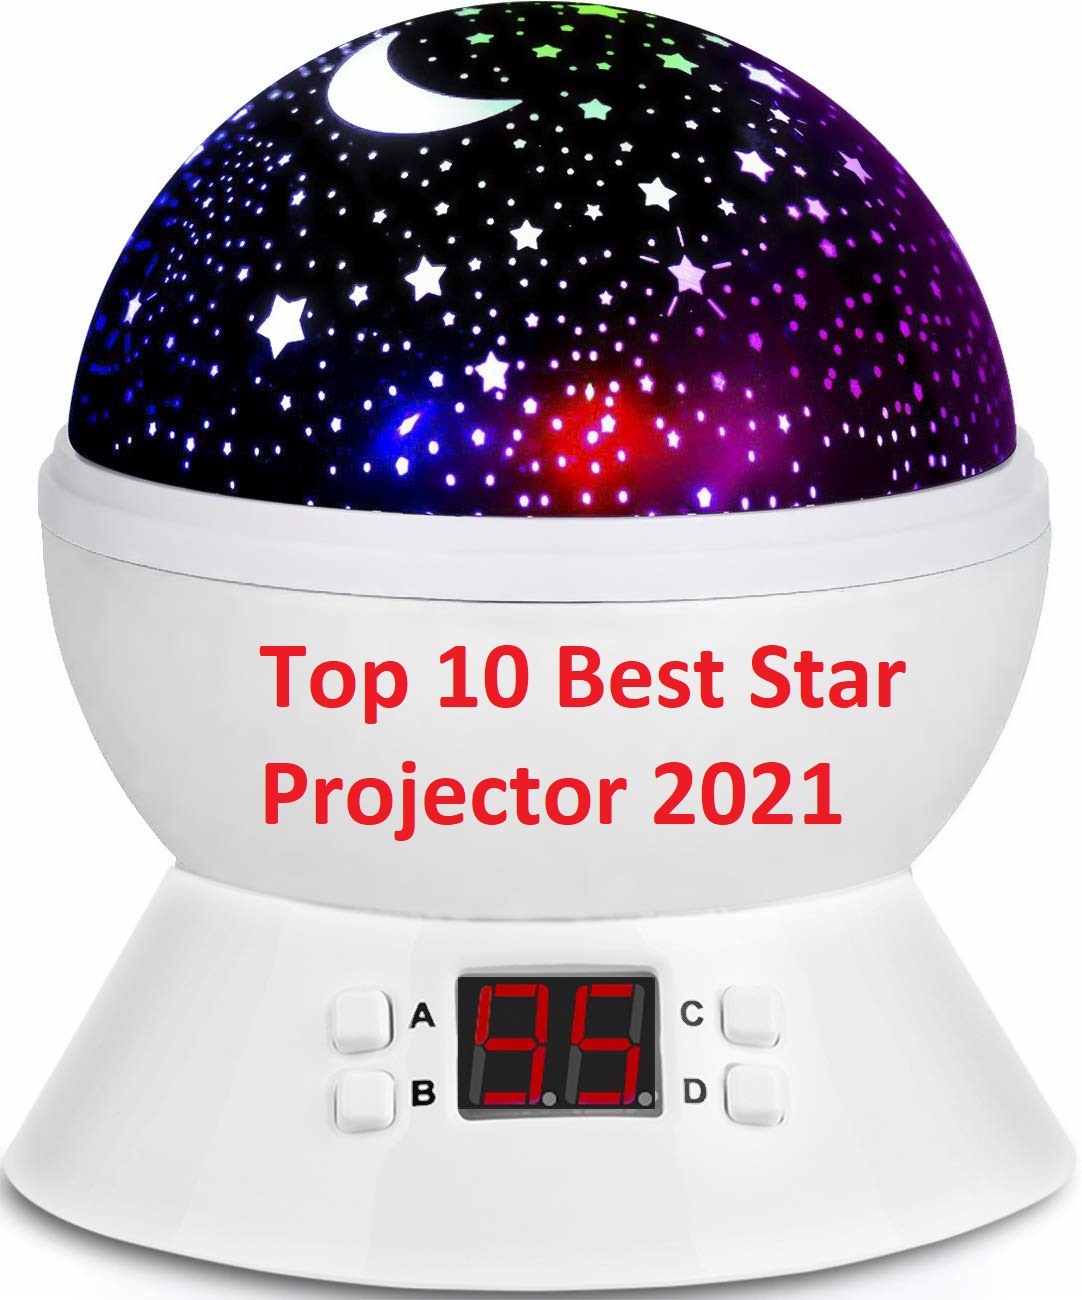 Top 10 Best Star Projector | Star Projectors for Bedroom